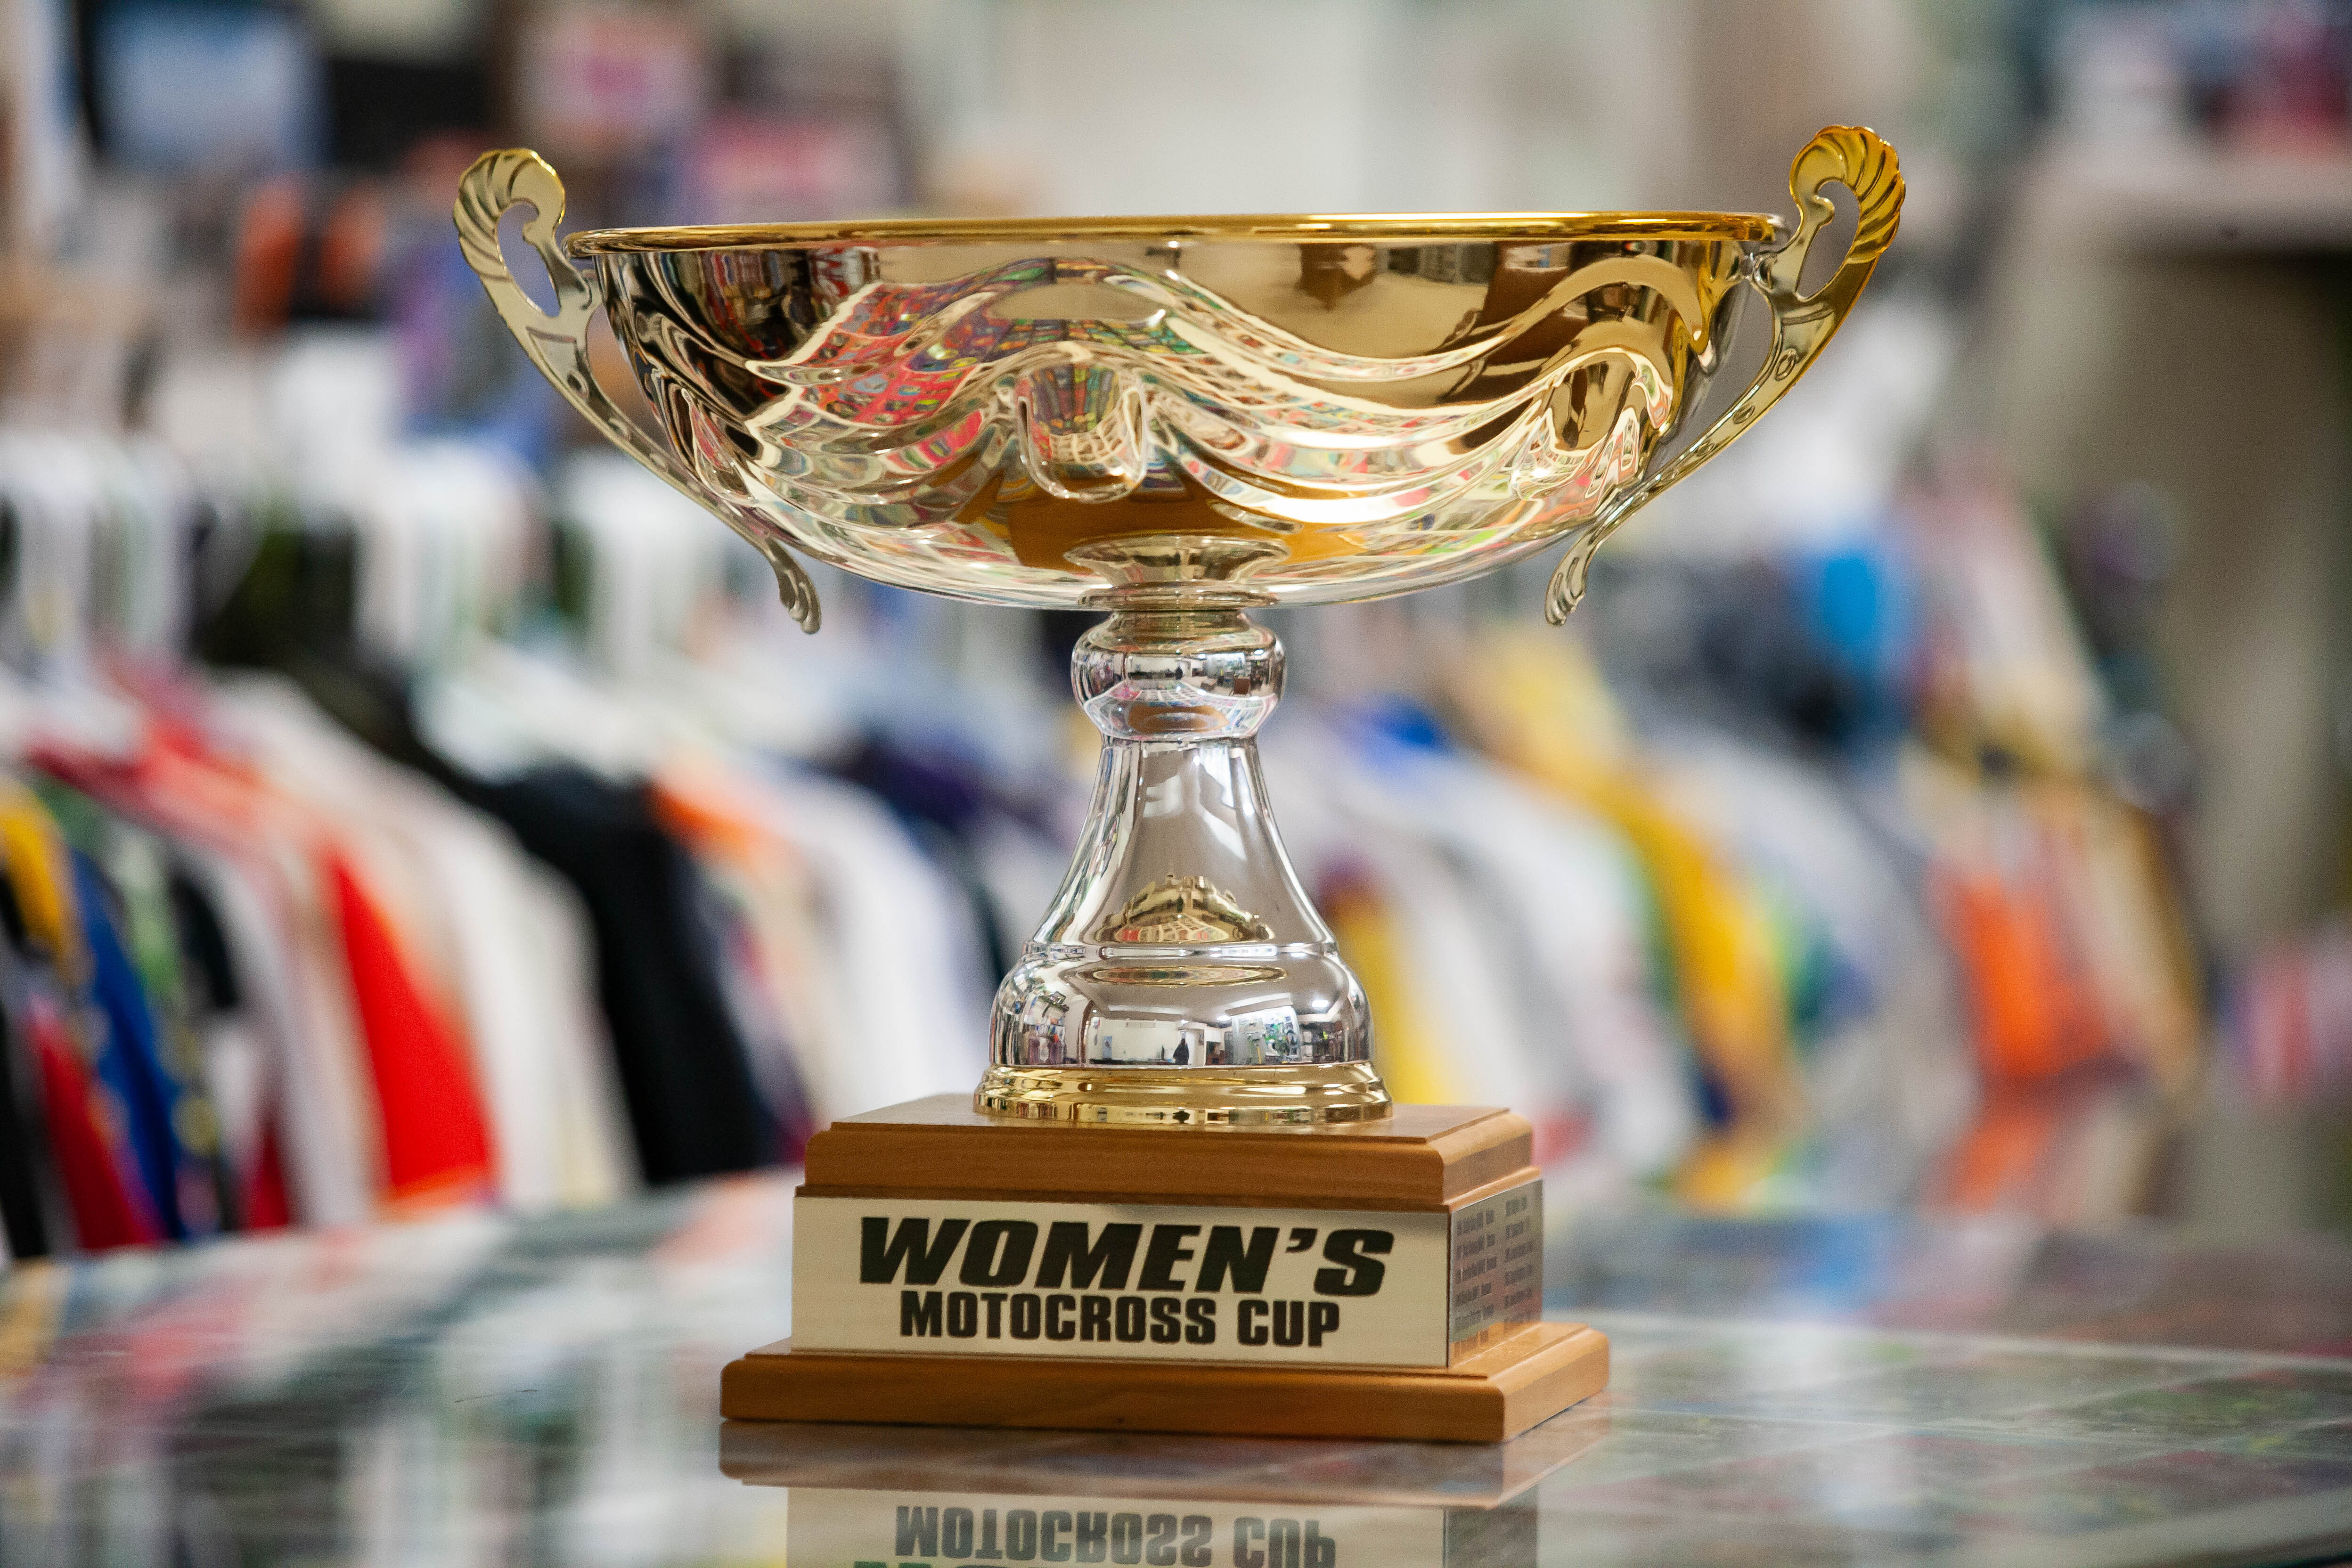 The Women's Motocross Cup